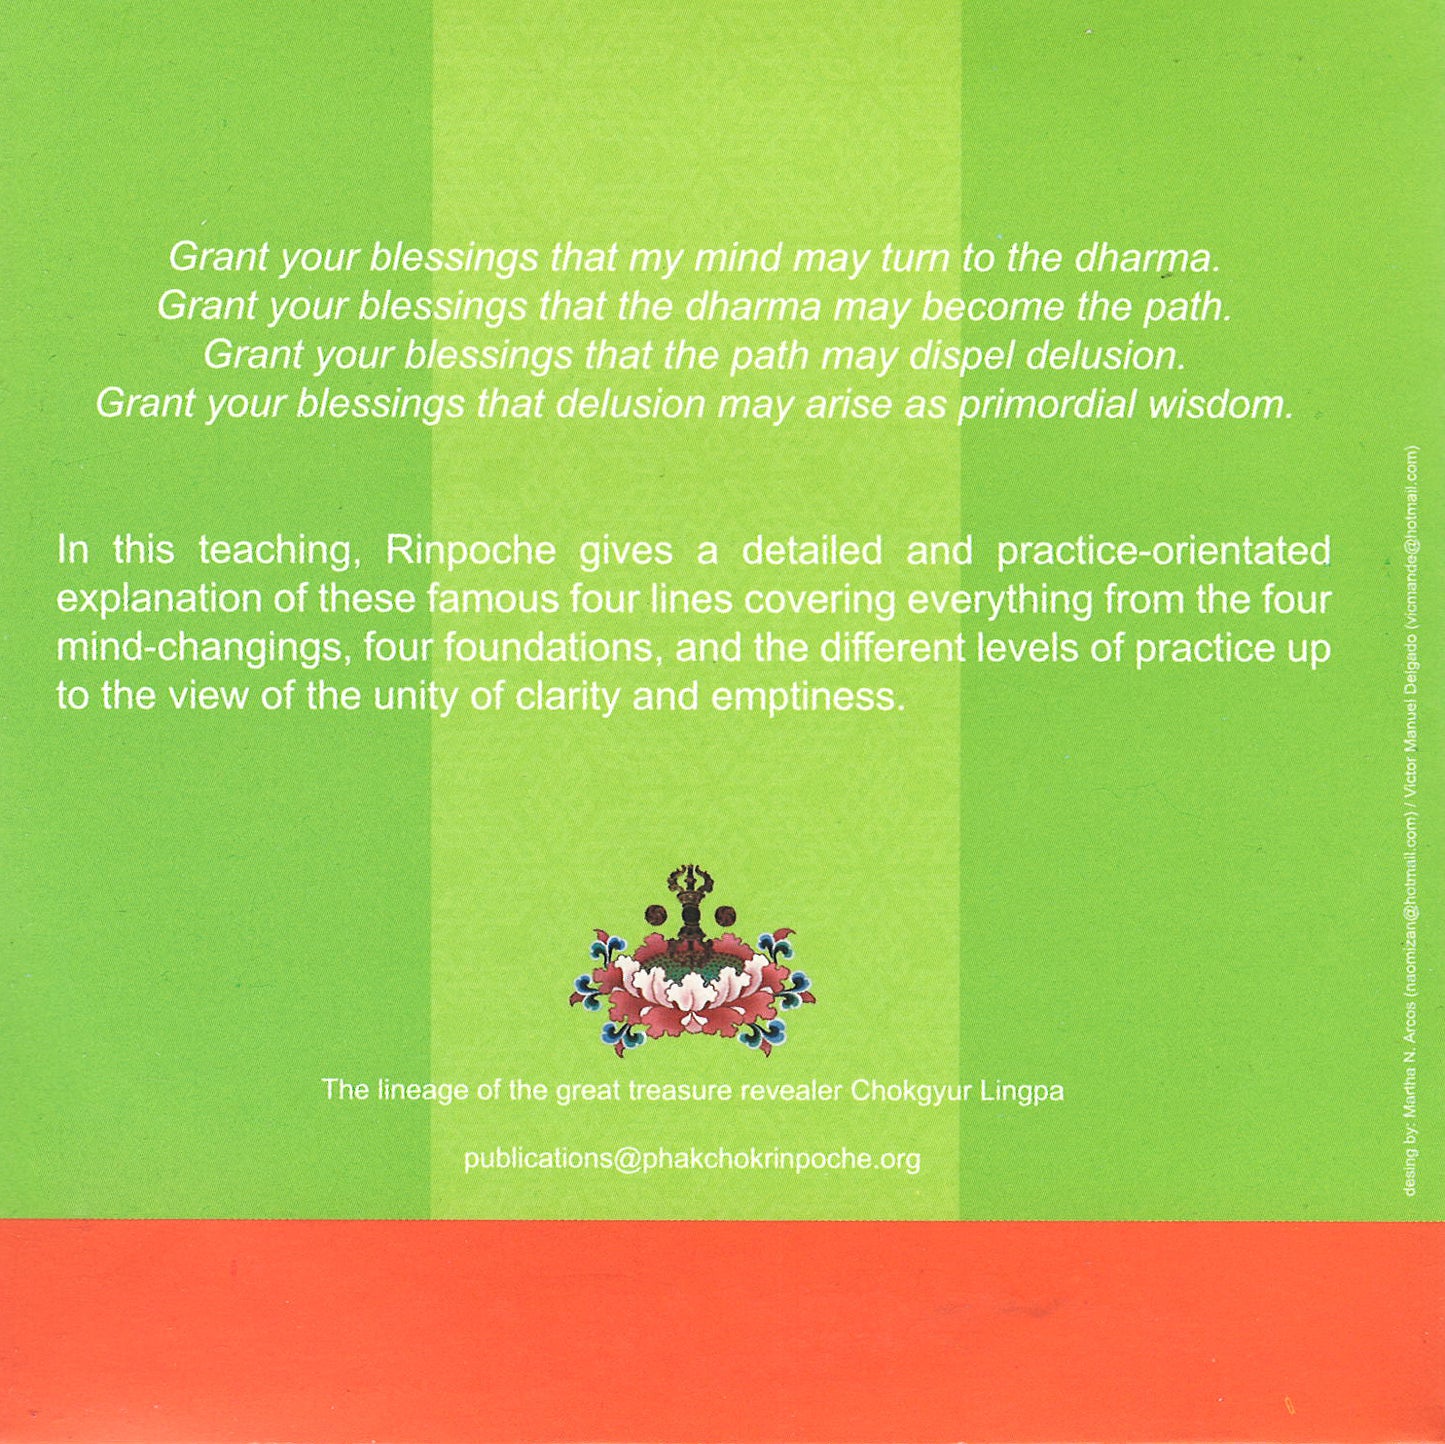 Longchenpa's Prayer in Four Lines CD